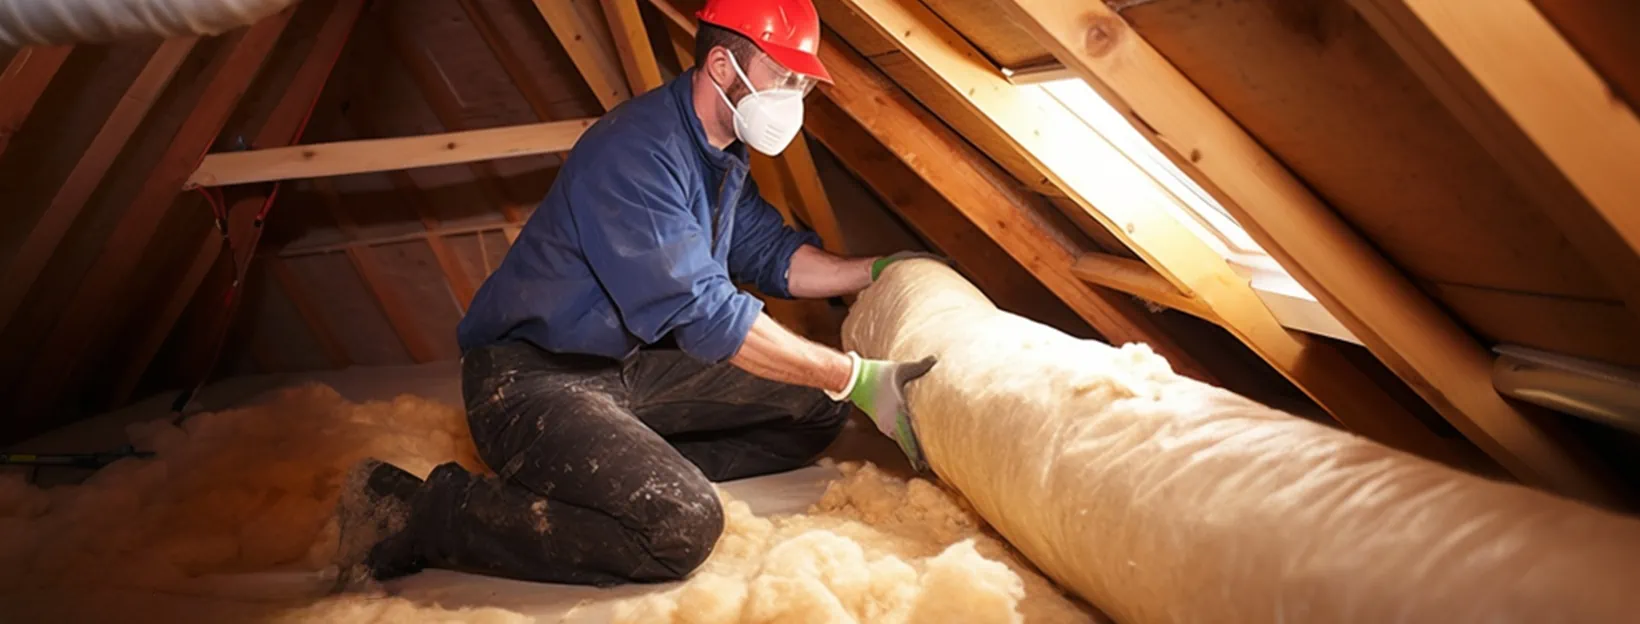 loft insulation grant Derby area